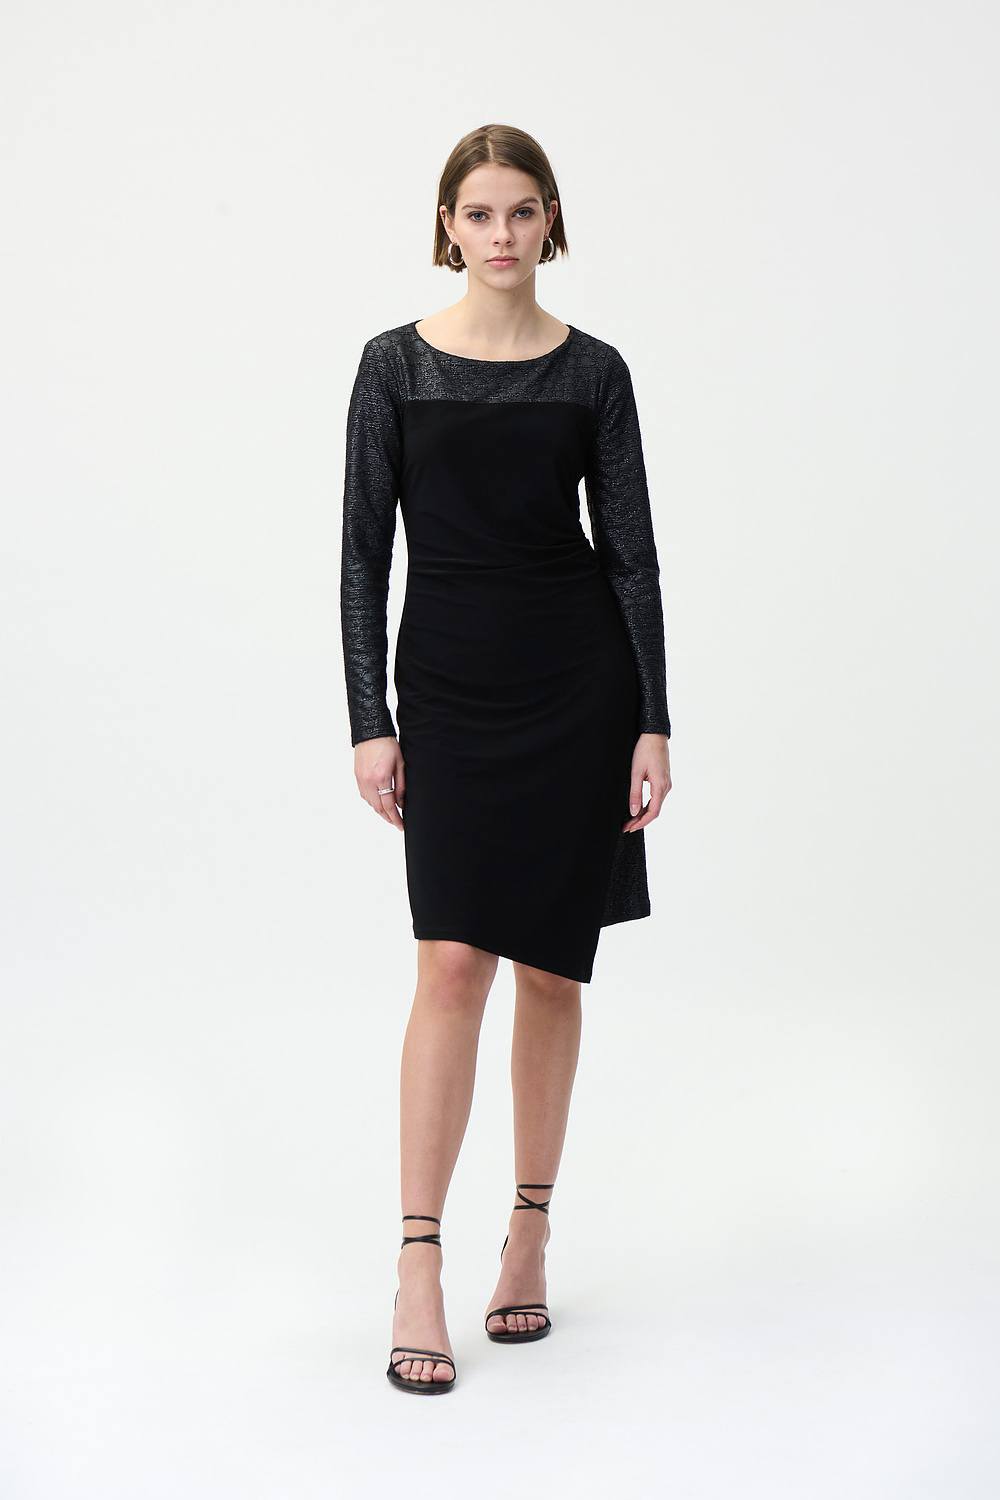 Joseph Ribkoff Ruched Detail Dress Style 224041. Black